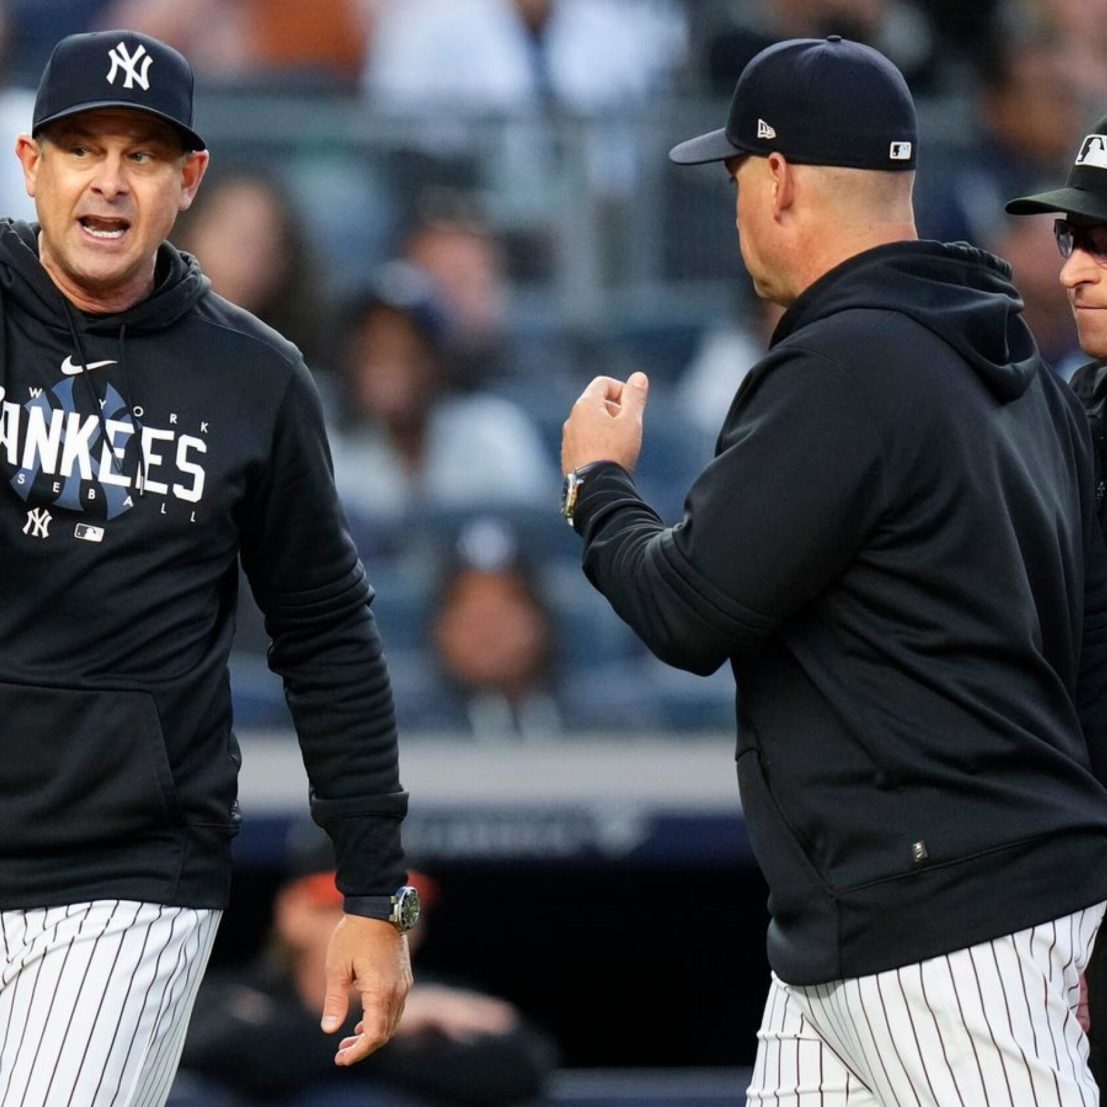 Astros cheating, Manfred response, gave baseball a black eye, Bronx  Pinstripes